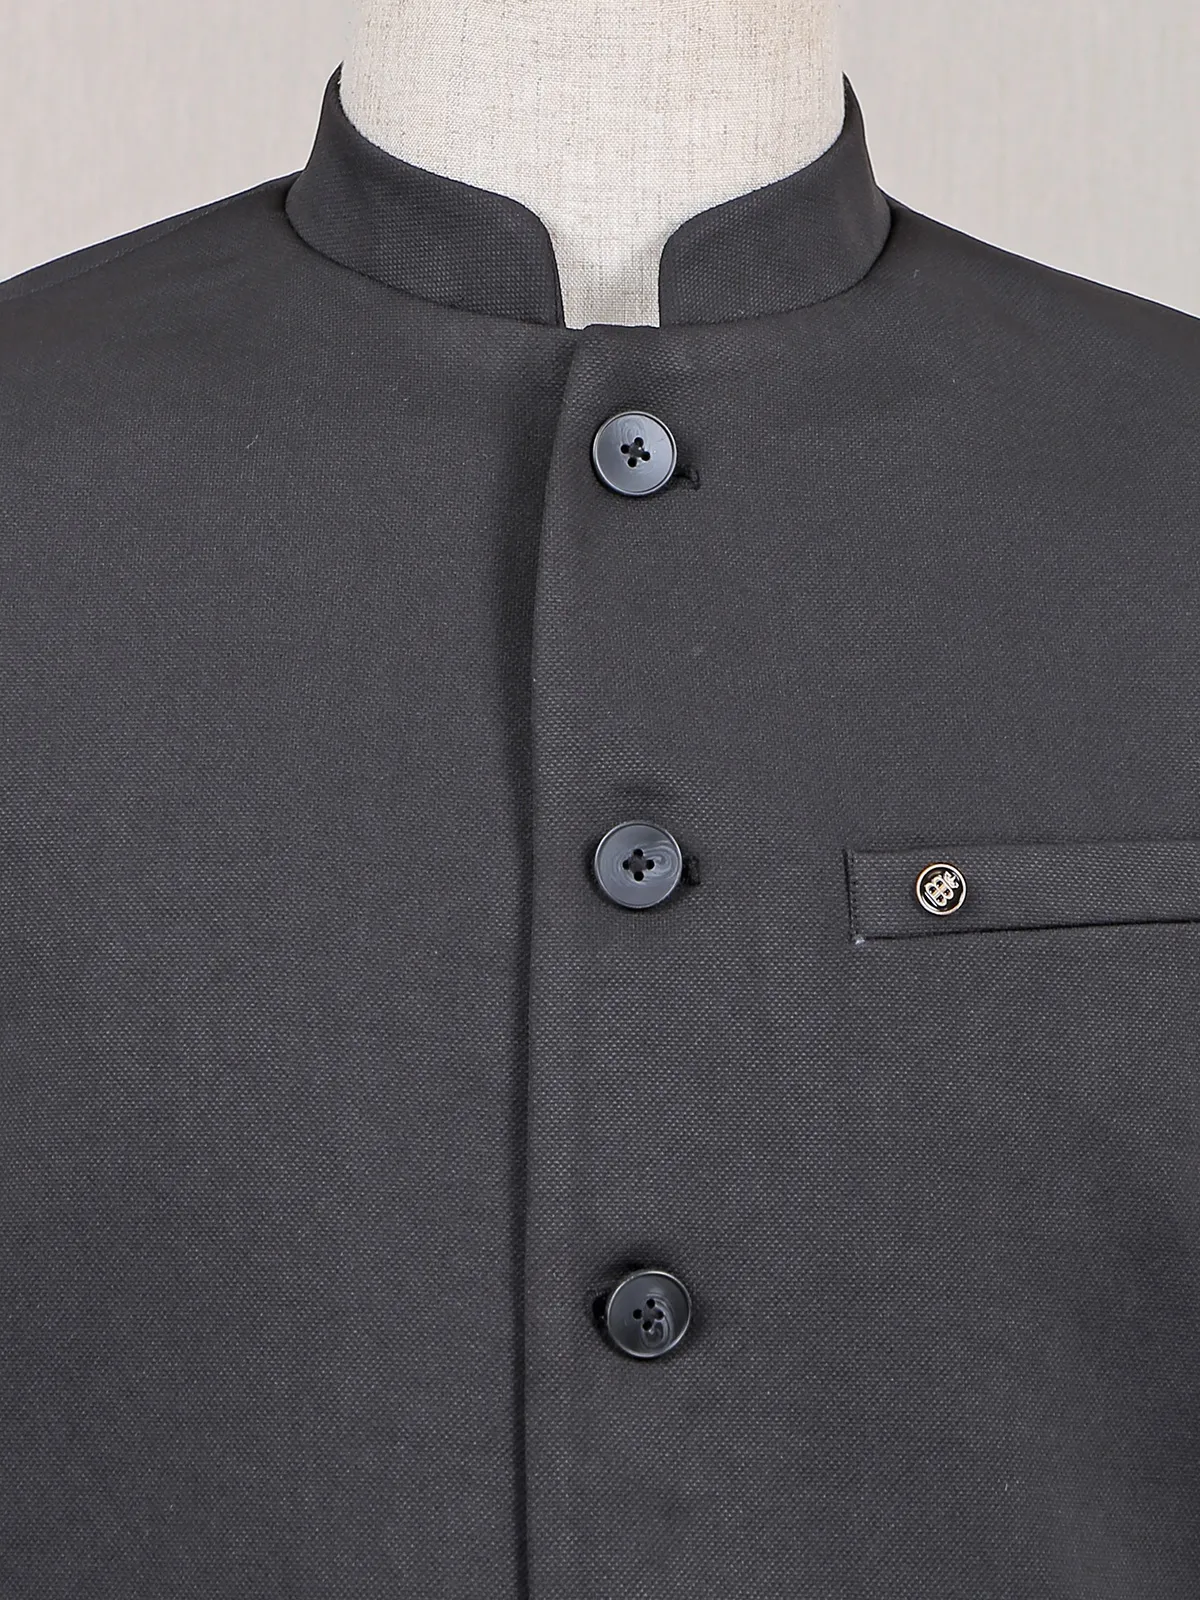 Charcoal grey solid terry rayon waistcoat